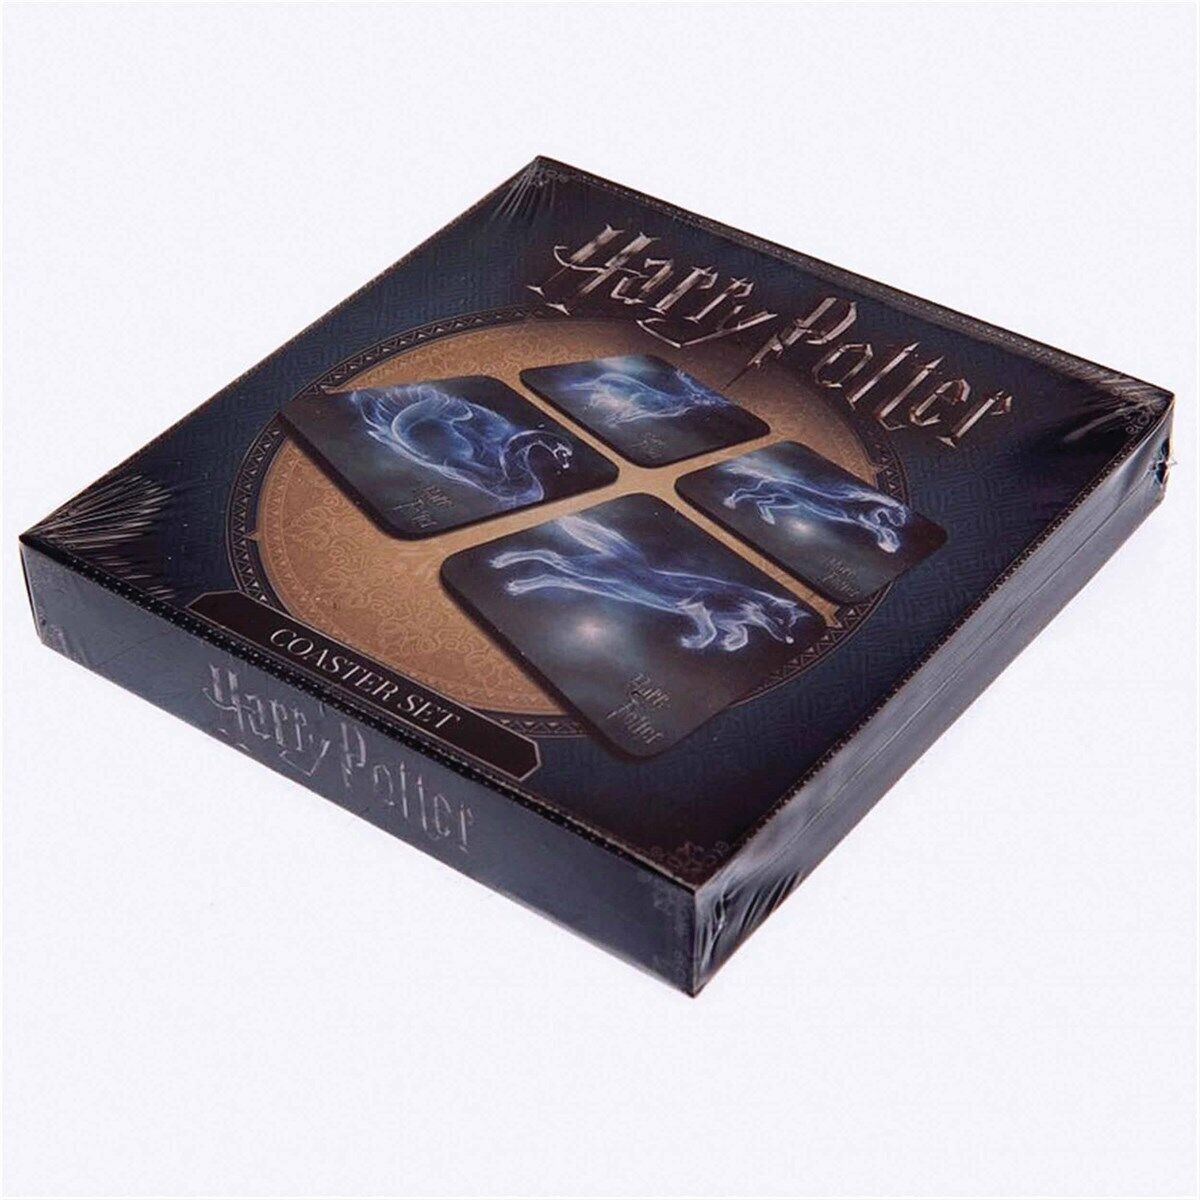 Harry Potter Coaster Set